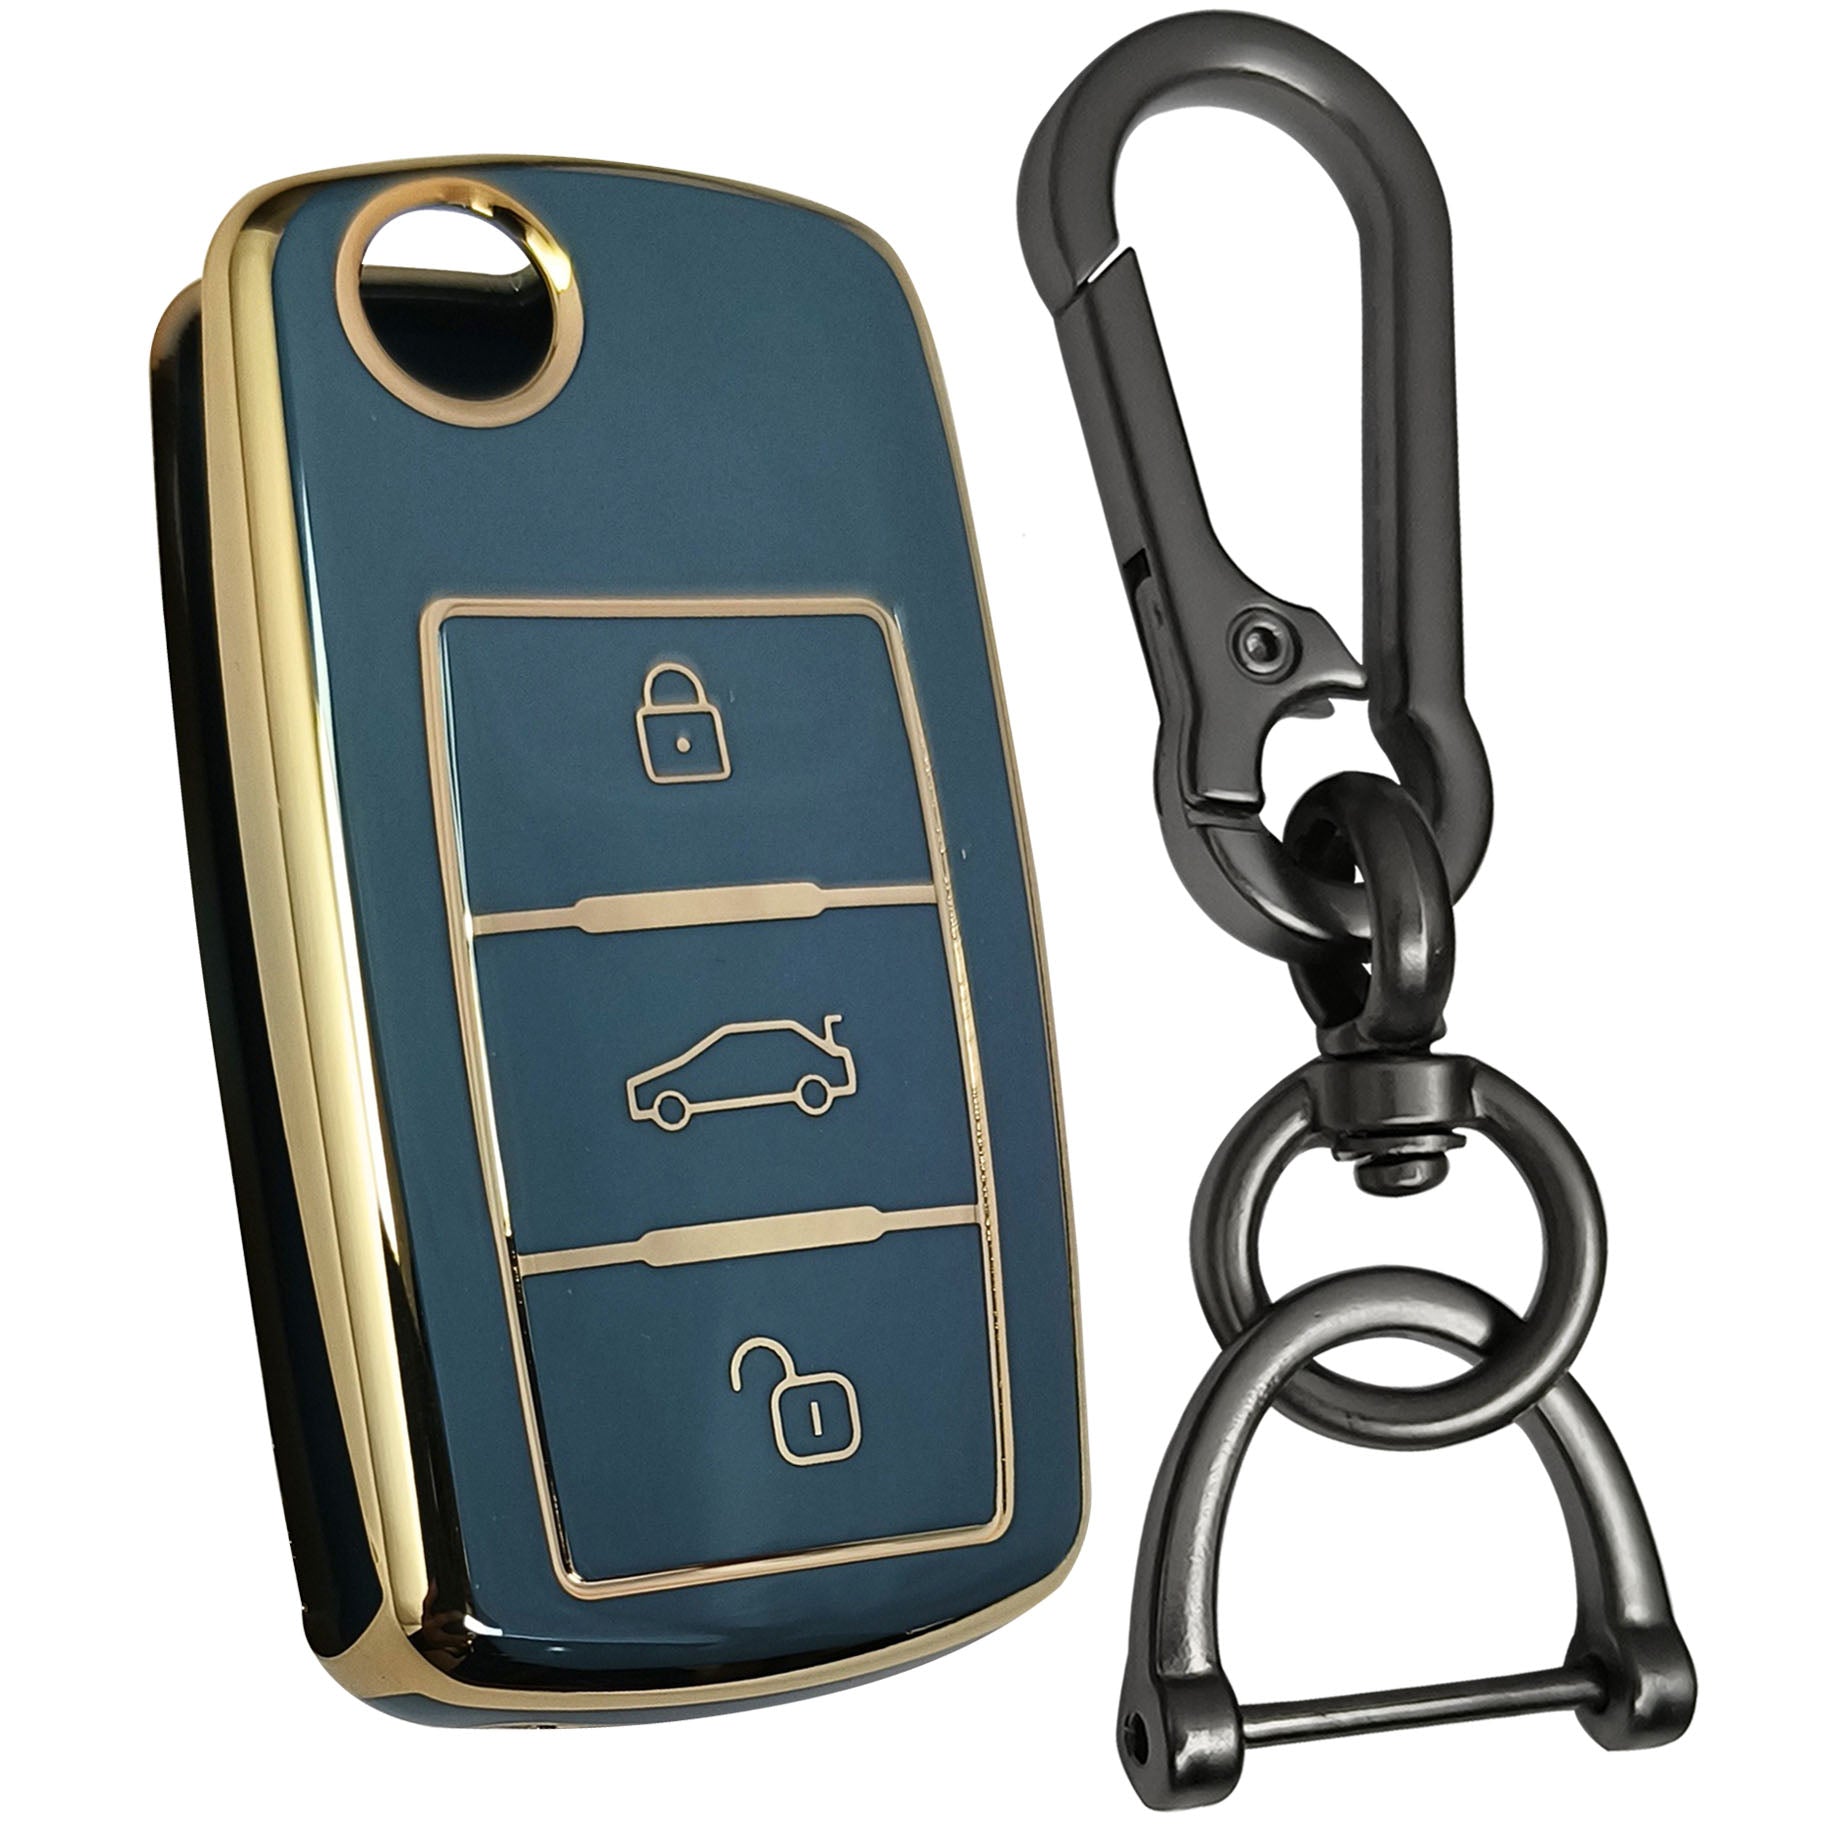 skoda octavia laura fabia 3 button flip key tpu blue gold key cover case accessories keychain